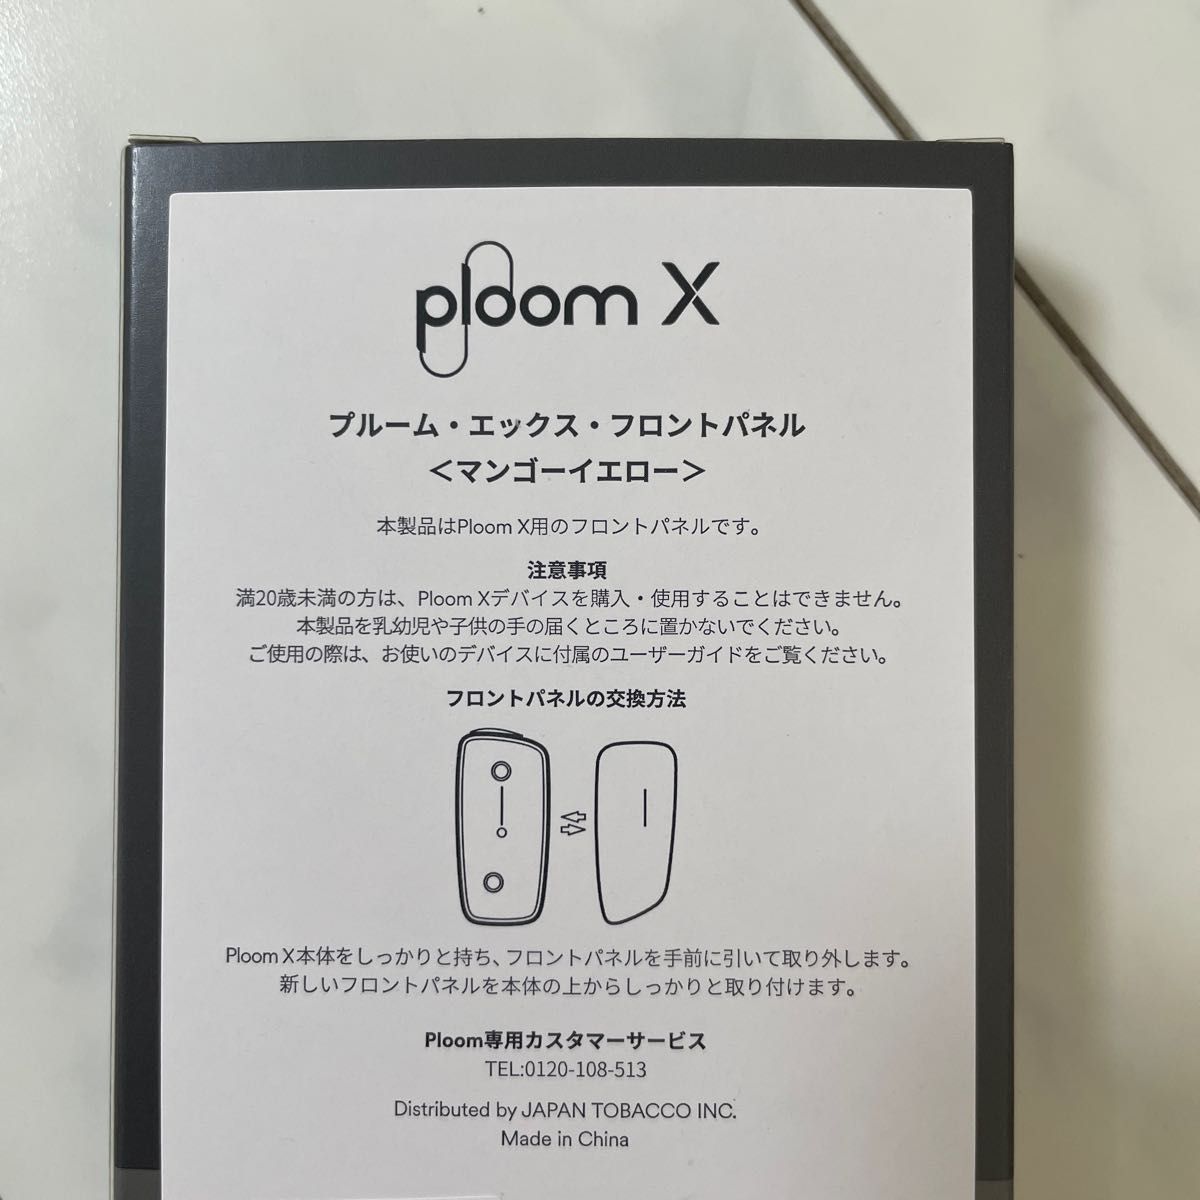 PloomX フロントパネル